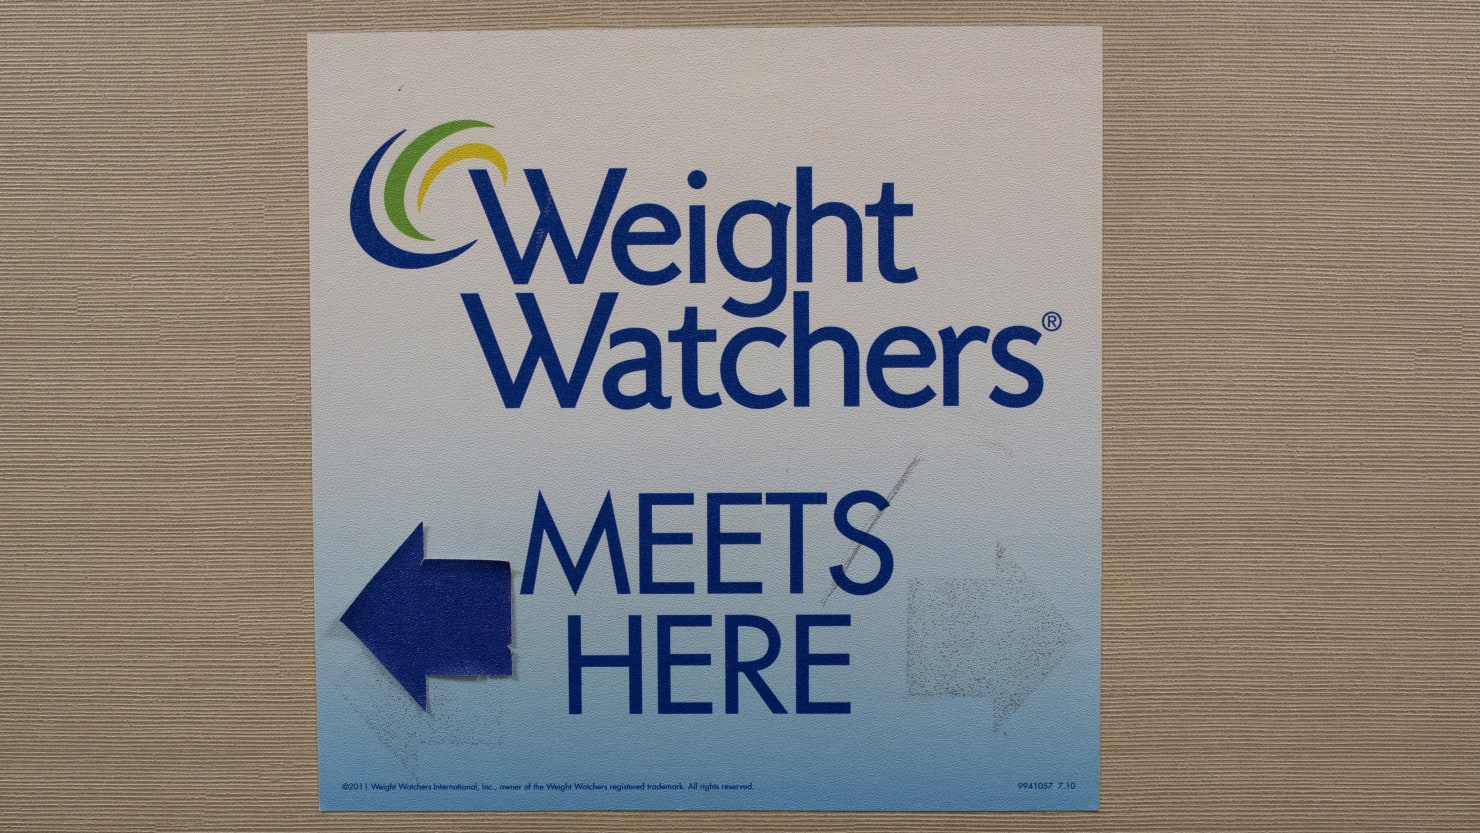 WeightWatchers to enter prescription drug weight loss business